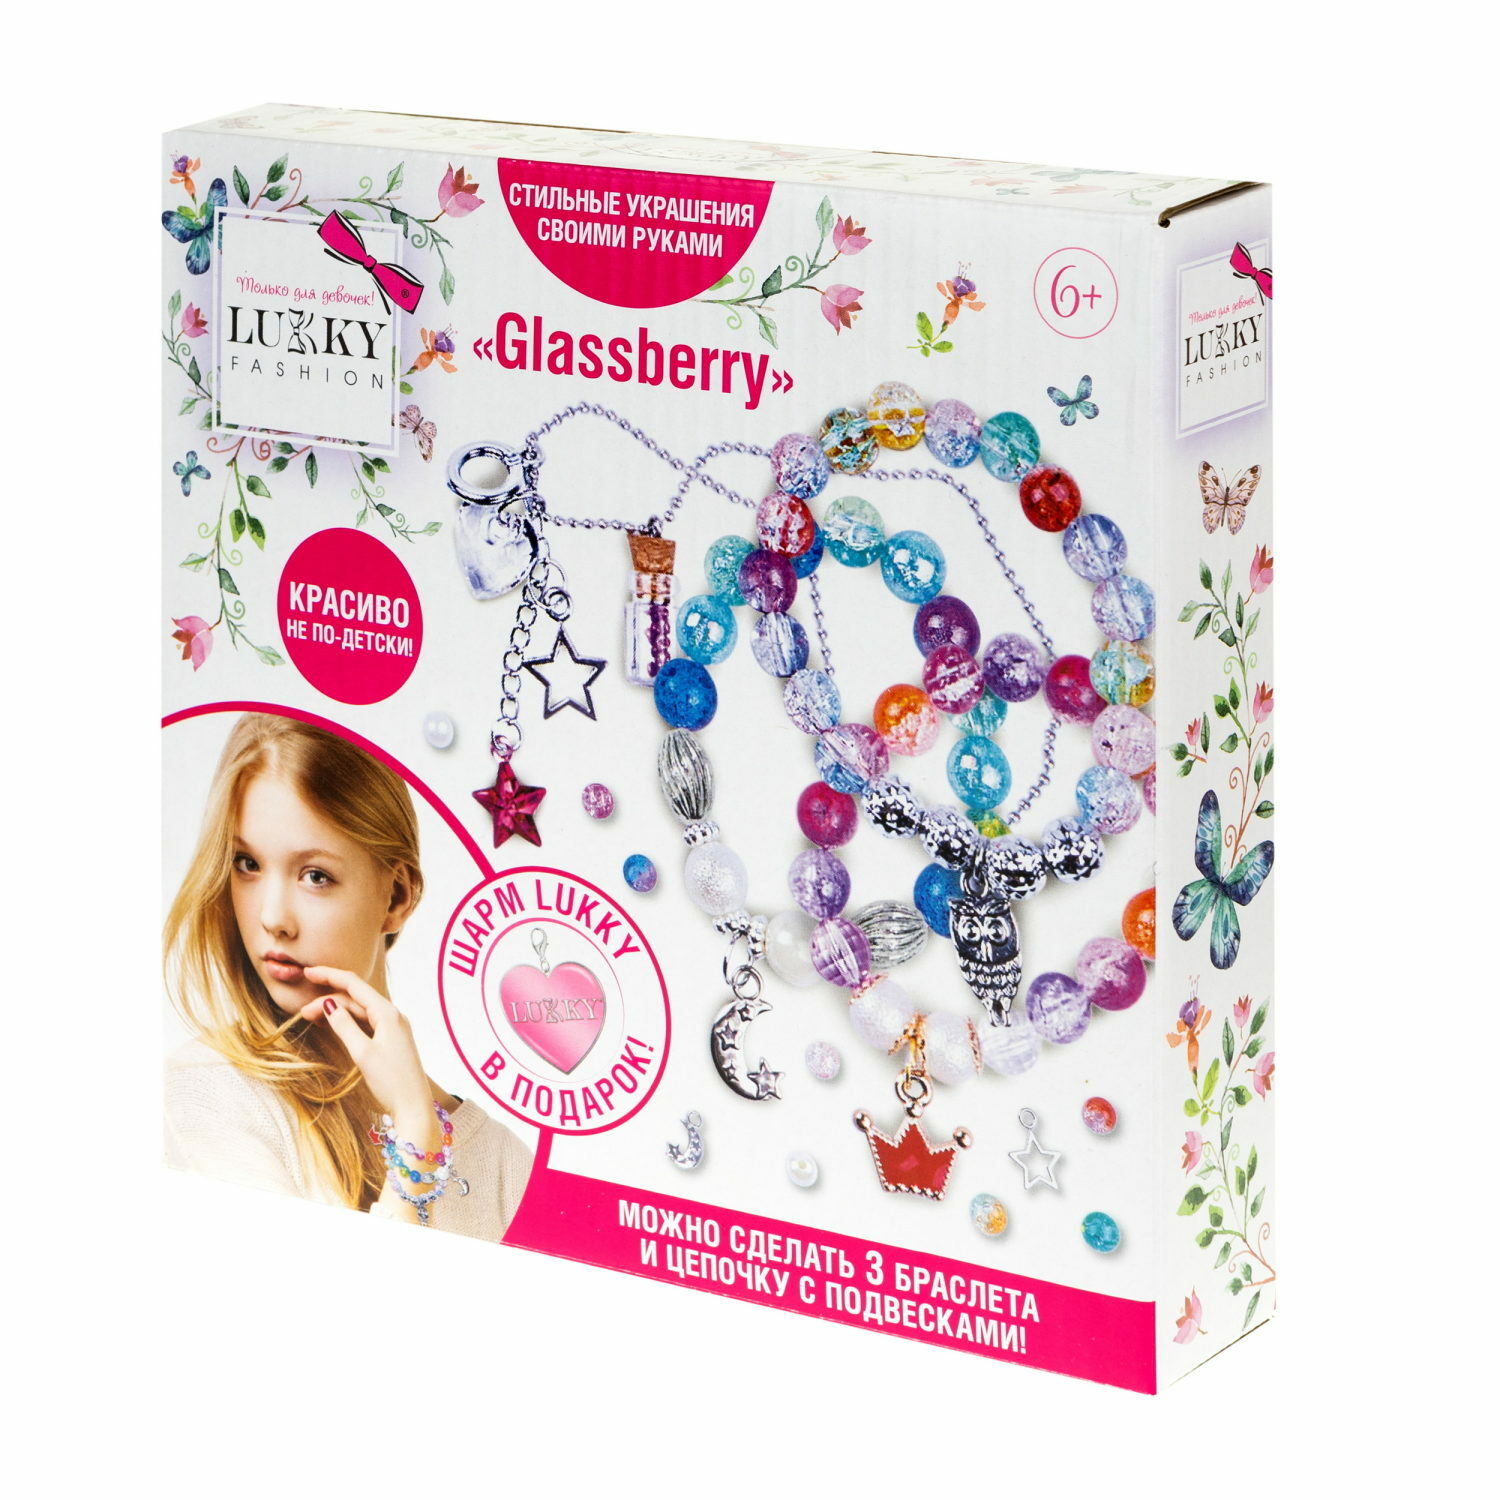 Набор для создания браслетов Lukky fashion Glassberry - фото 4